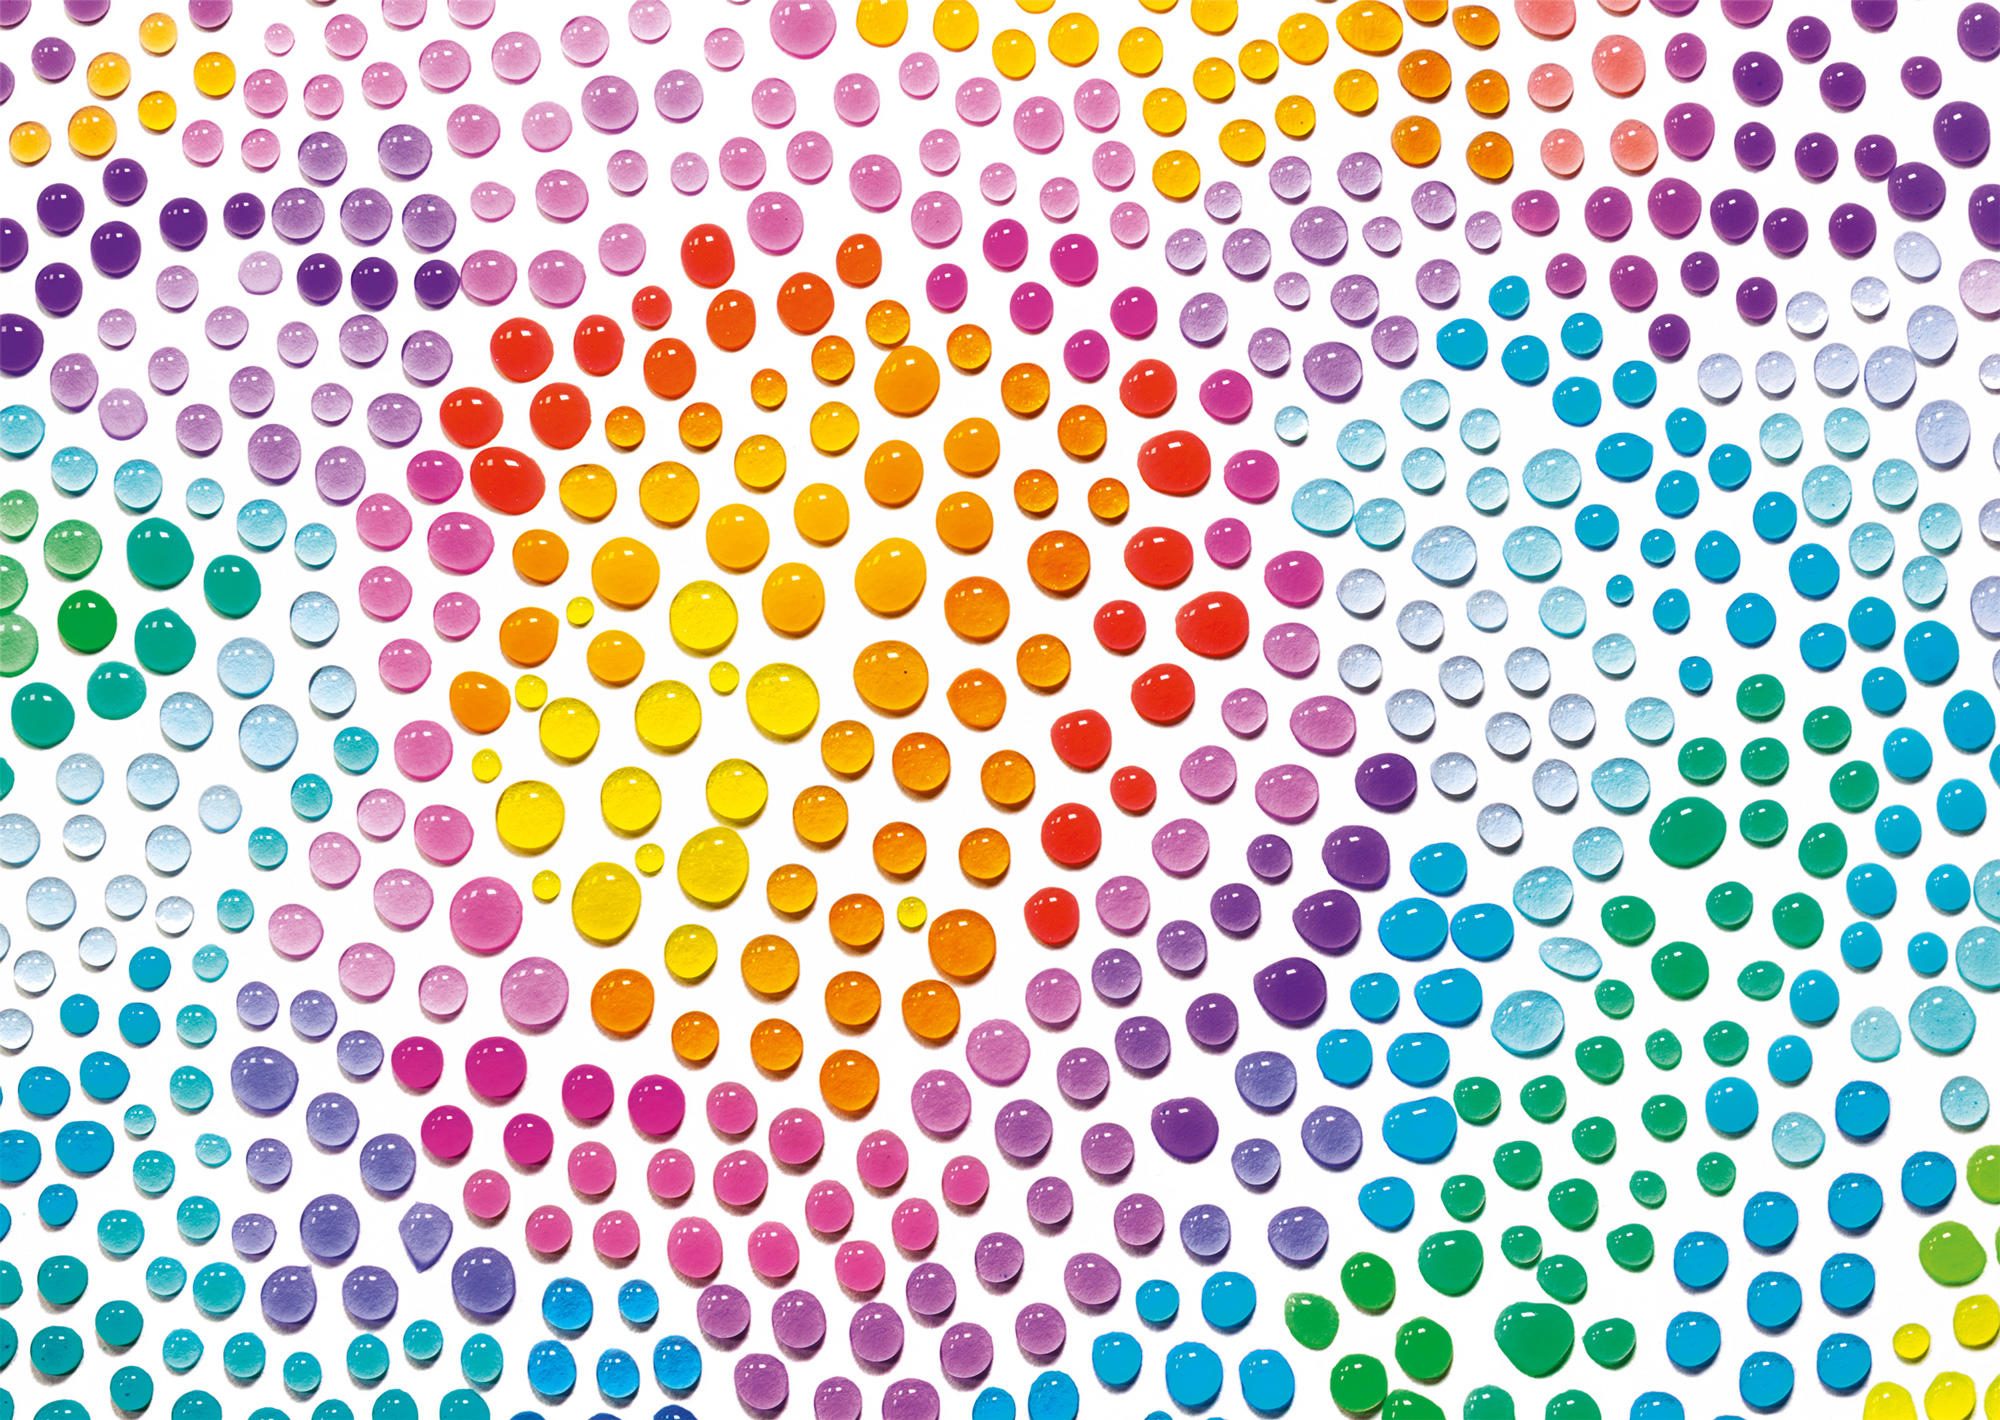 Puzzle Josie Lewis: Kolorowe bańki mydlane